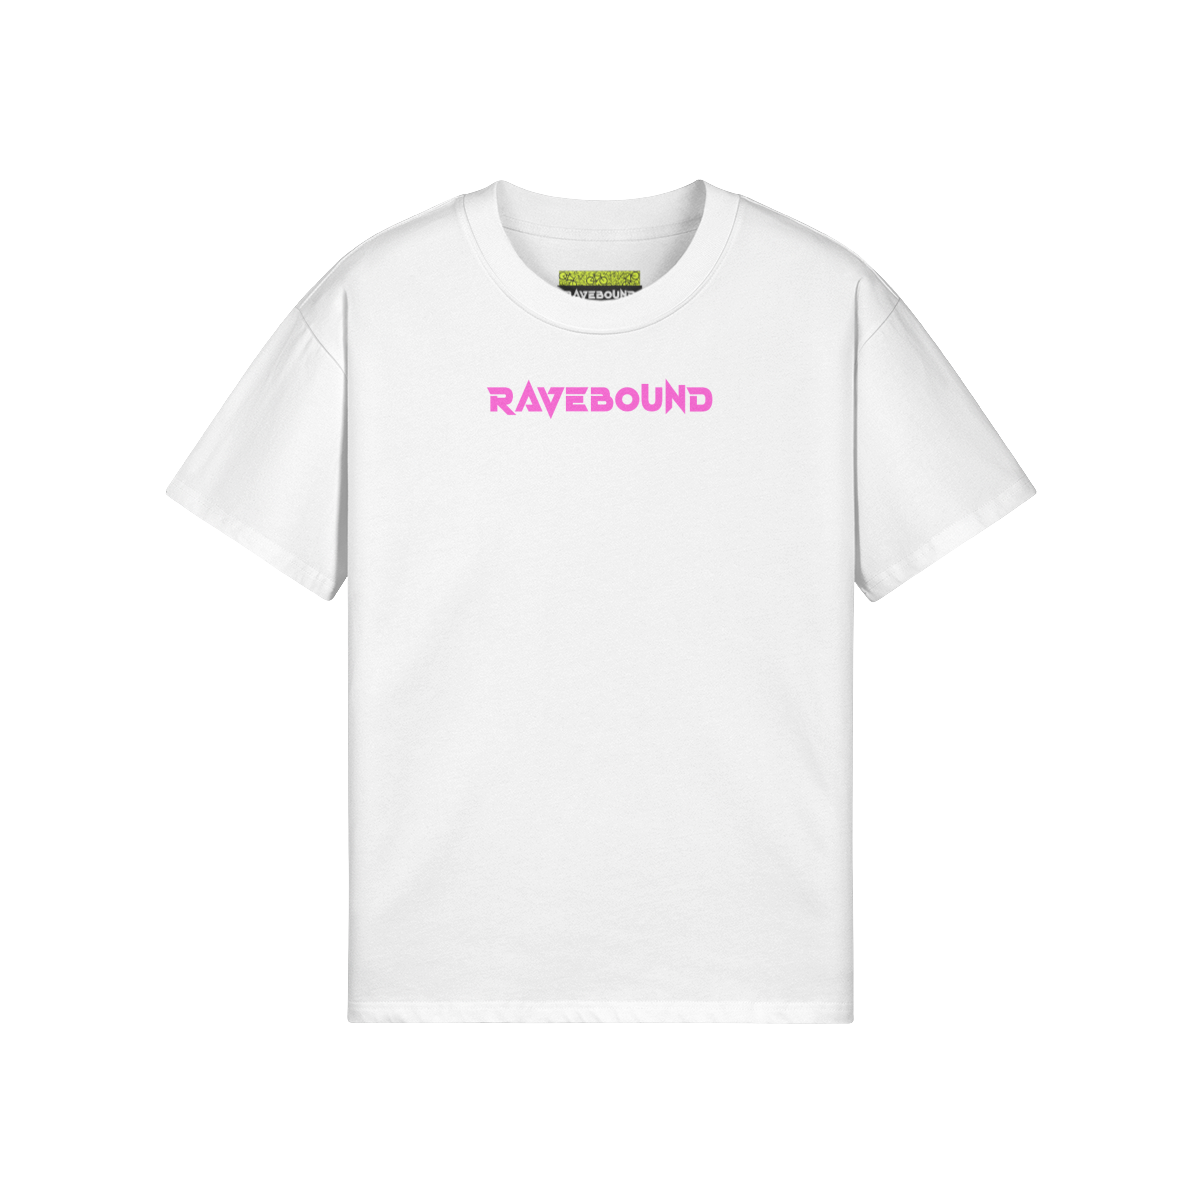 $MILE M. (BACK PRINT) - Unisex Oversized T-shirt - white - front